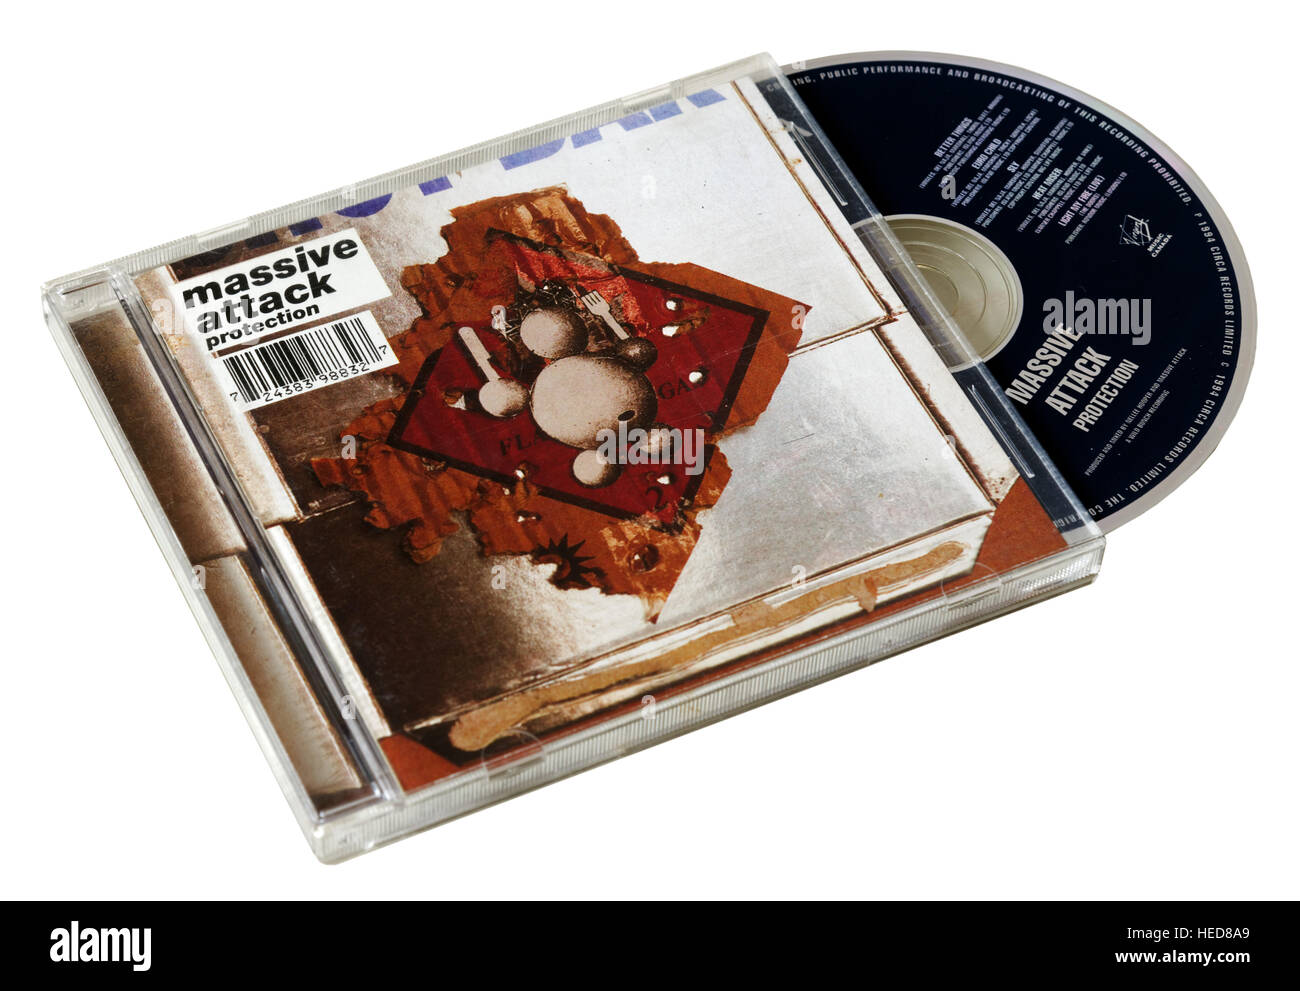 Massive Attack Protection CD Stock Photo